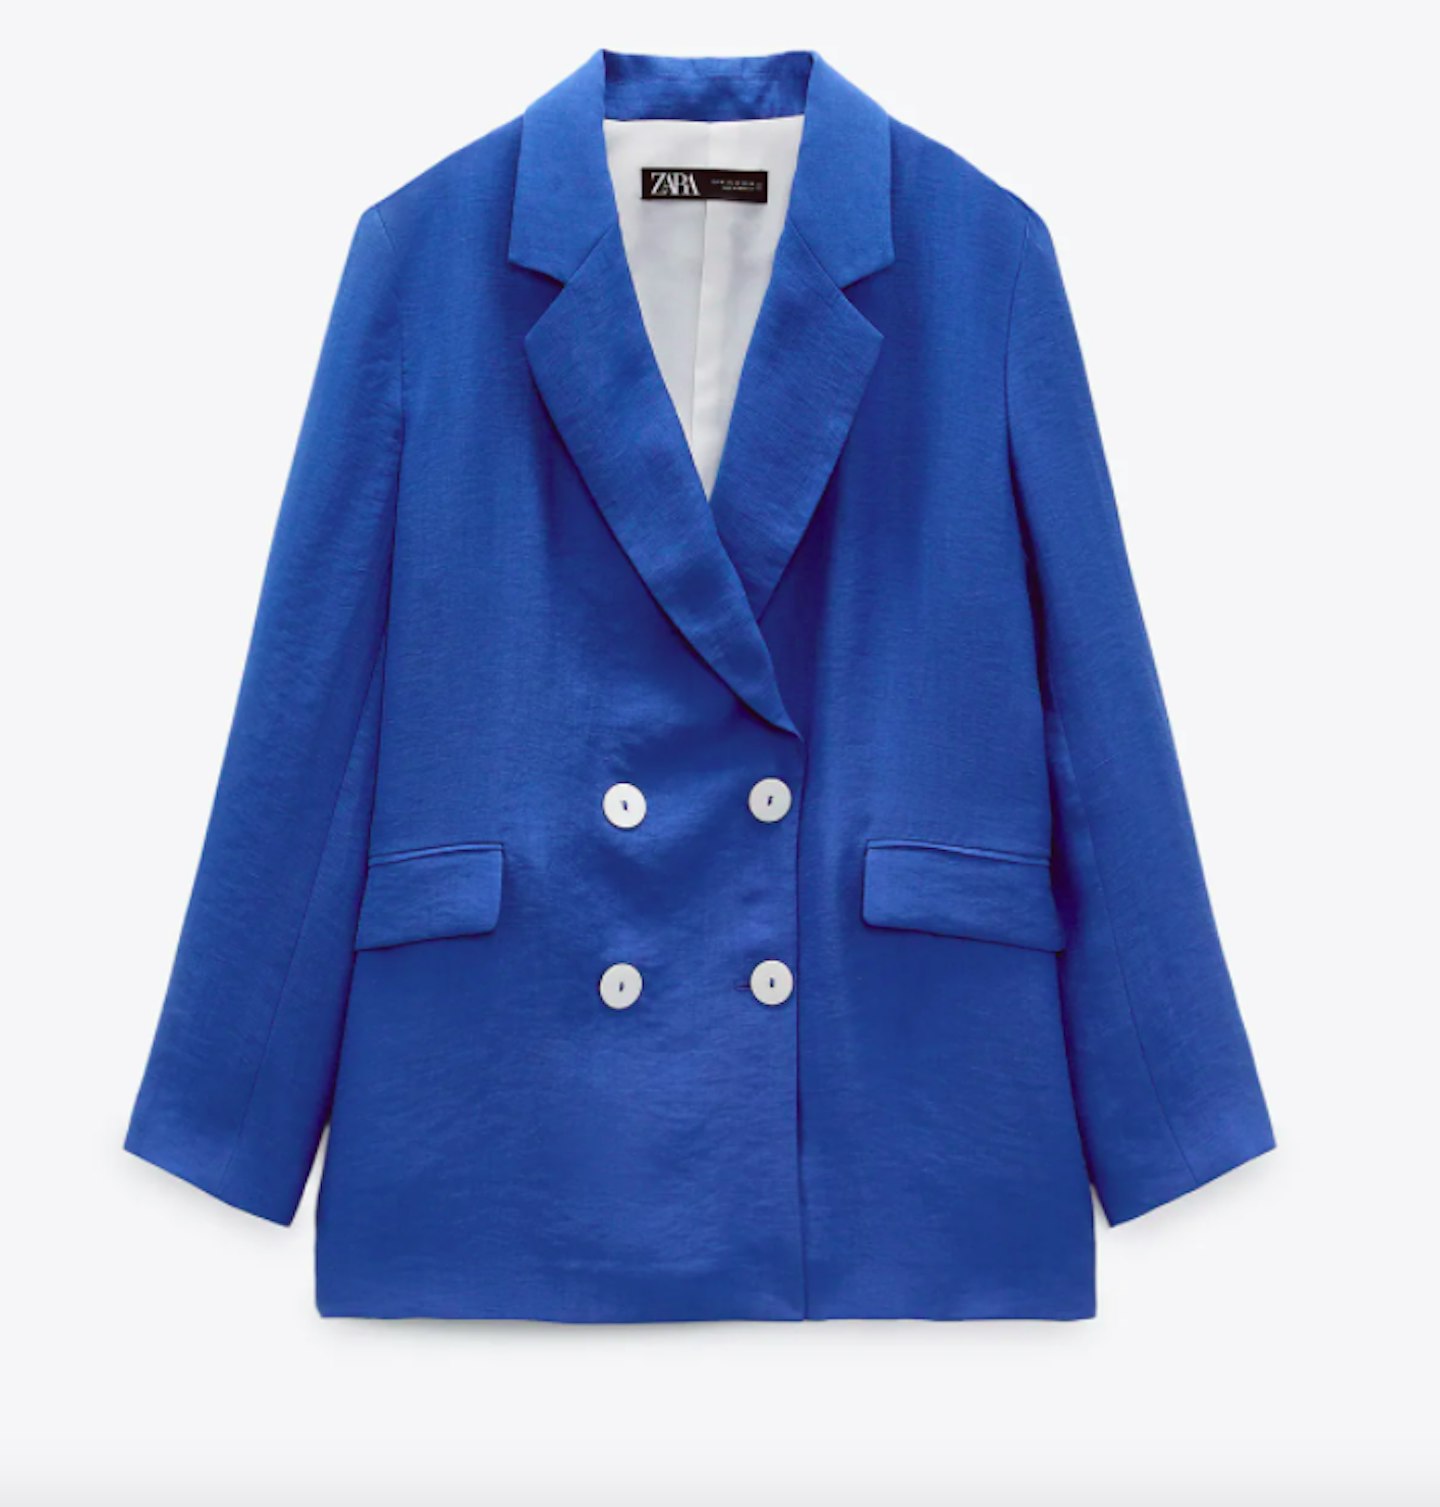 Zara, Oversized Double-Breasted Blazer, £59.99